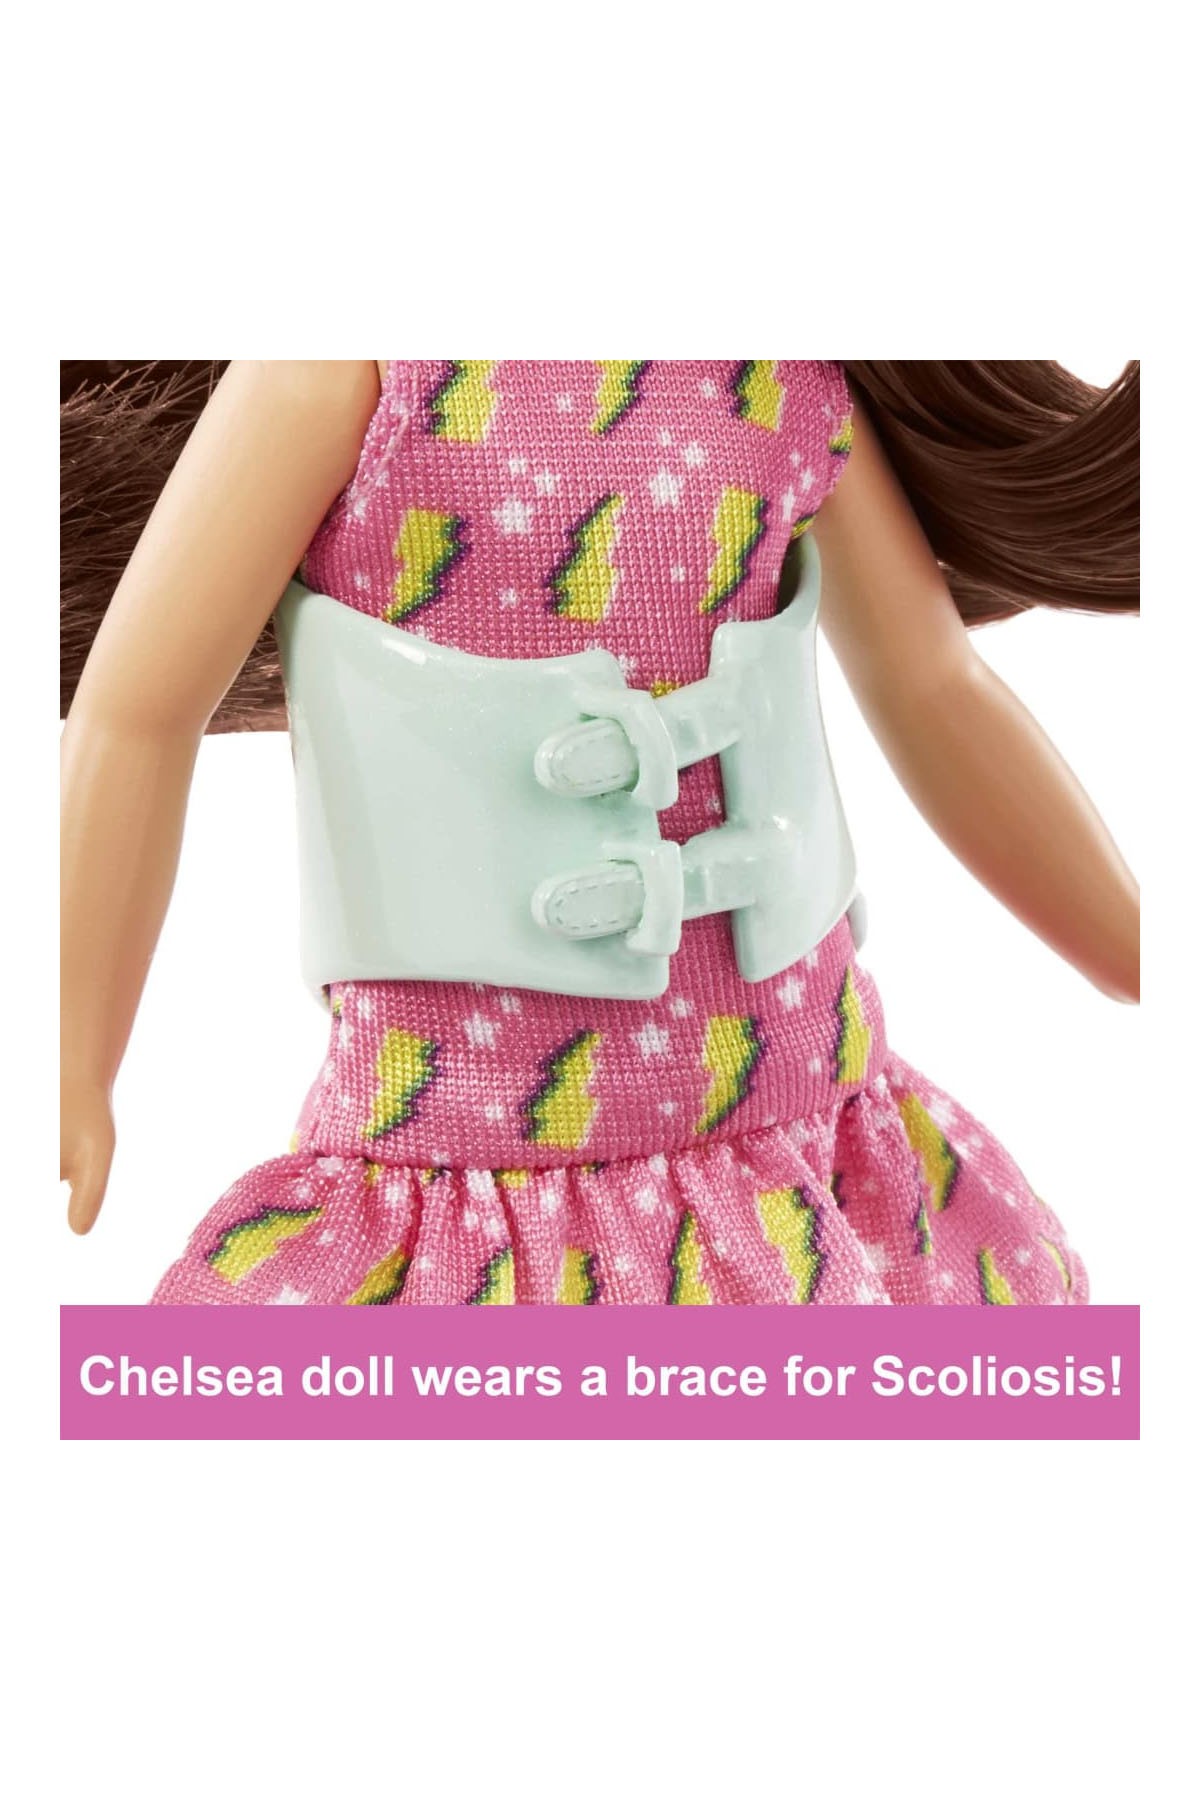 Barbie Chelsea Bebek Serisi HKD90